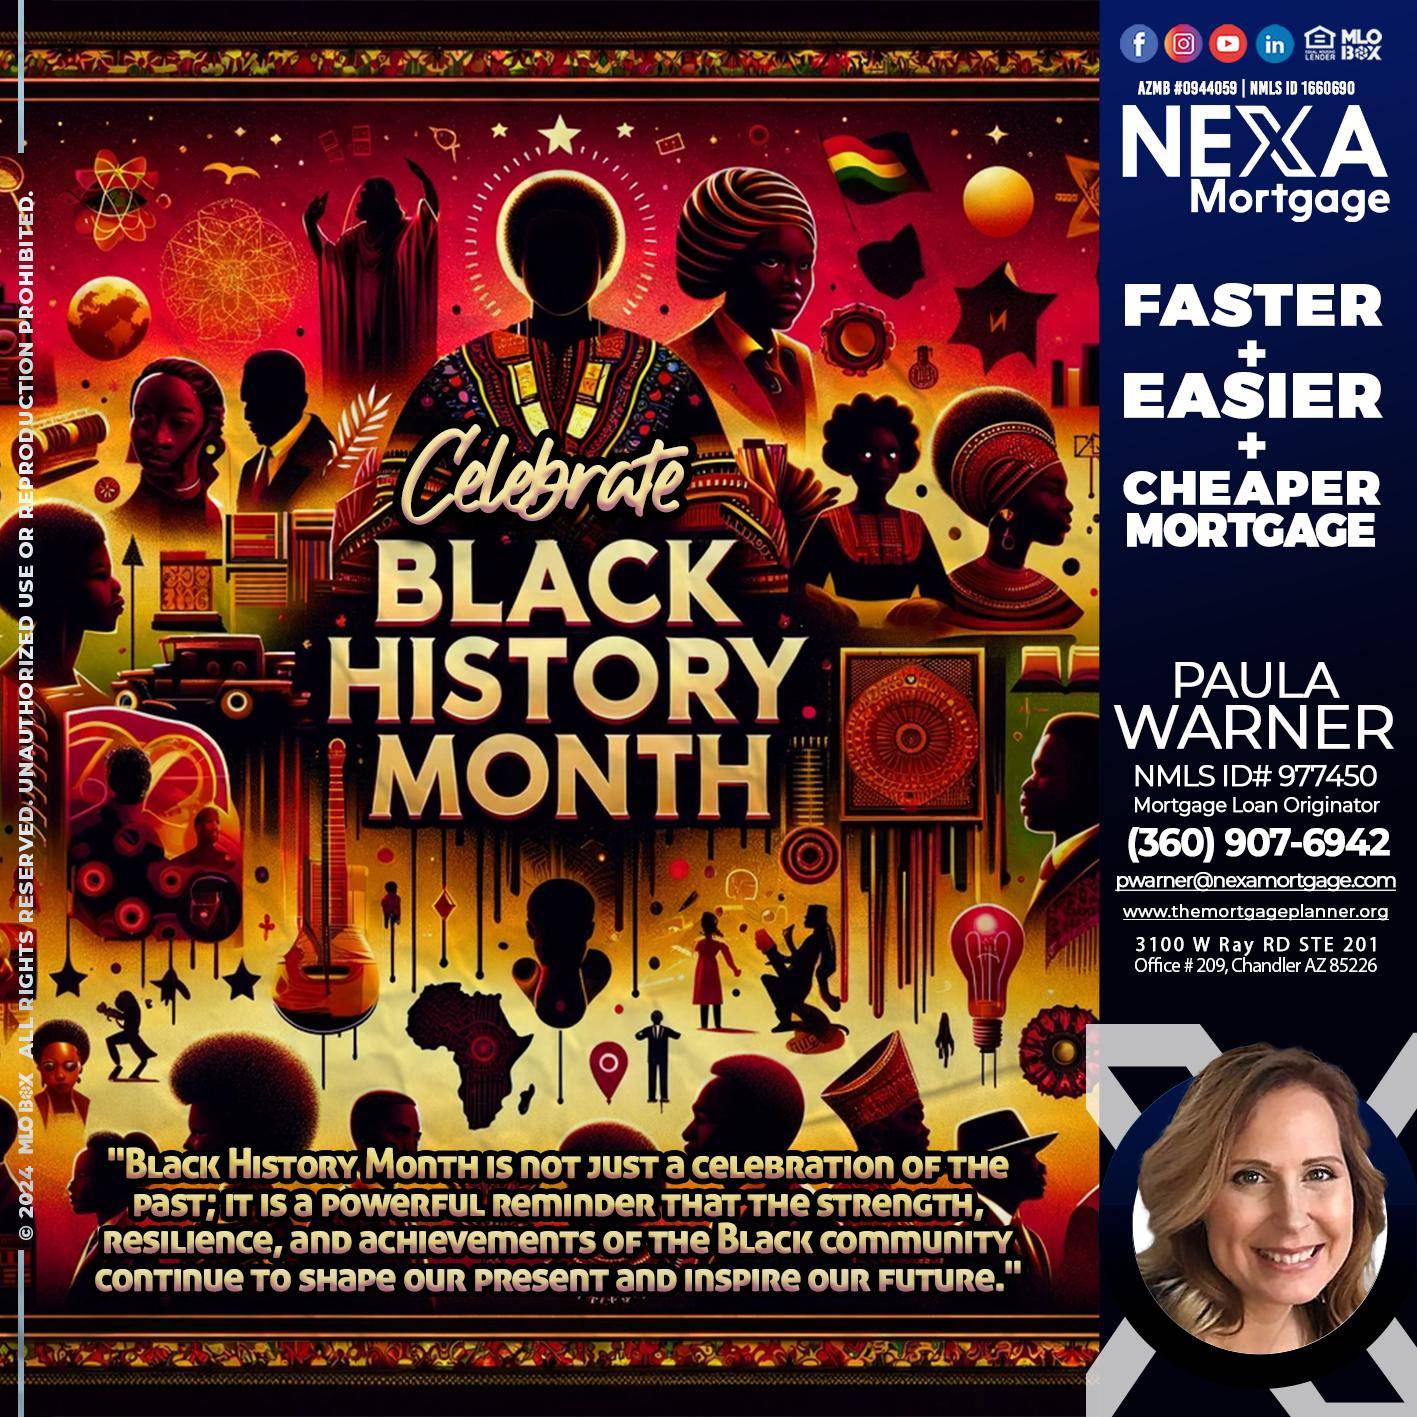 black history month - Paula Warner -Mortgage Loan Originator